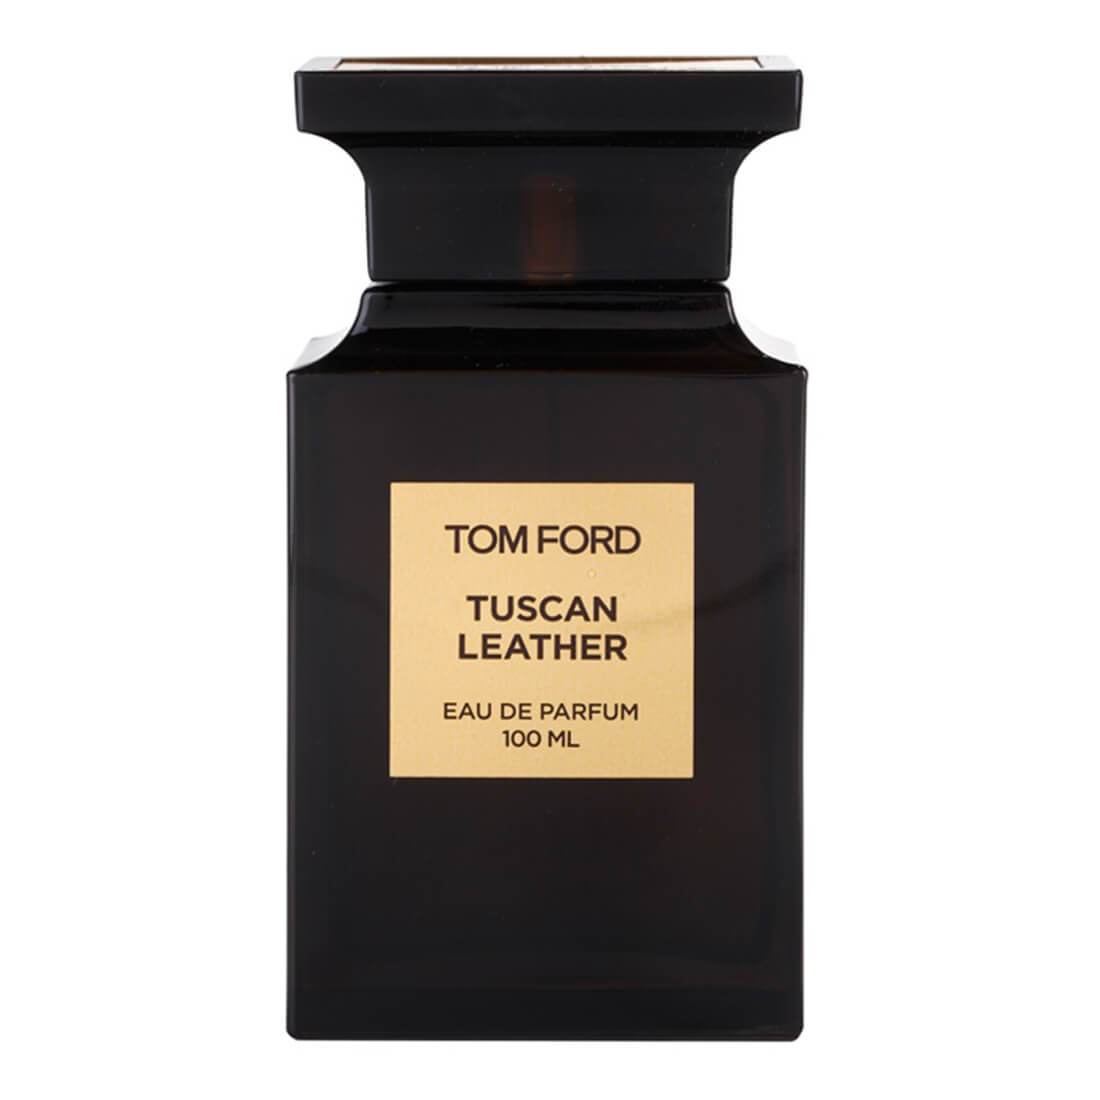 Tom Ford Tuscan Leather Eau De Perfume 100ml - Branded Fragrance India